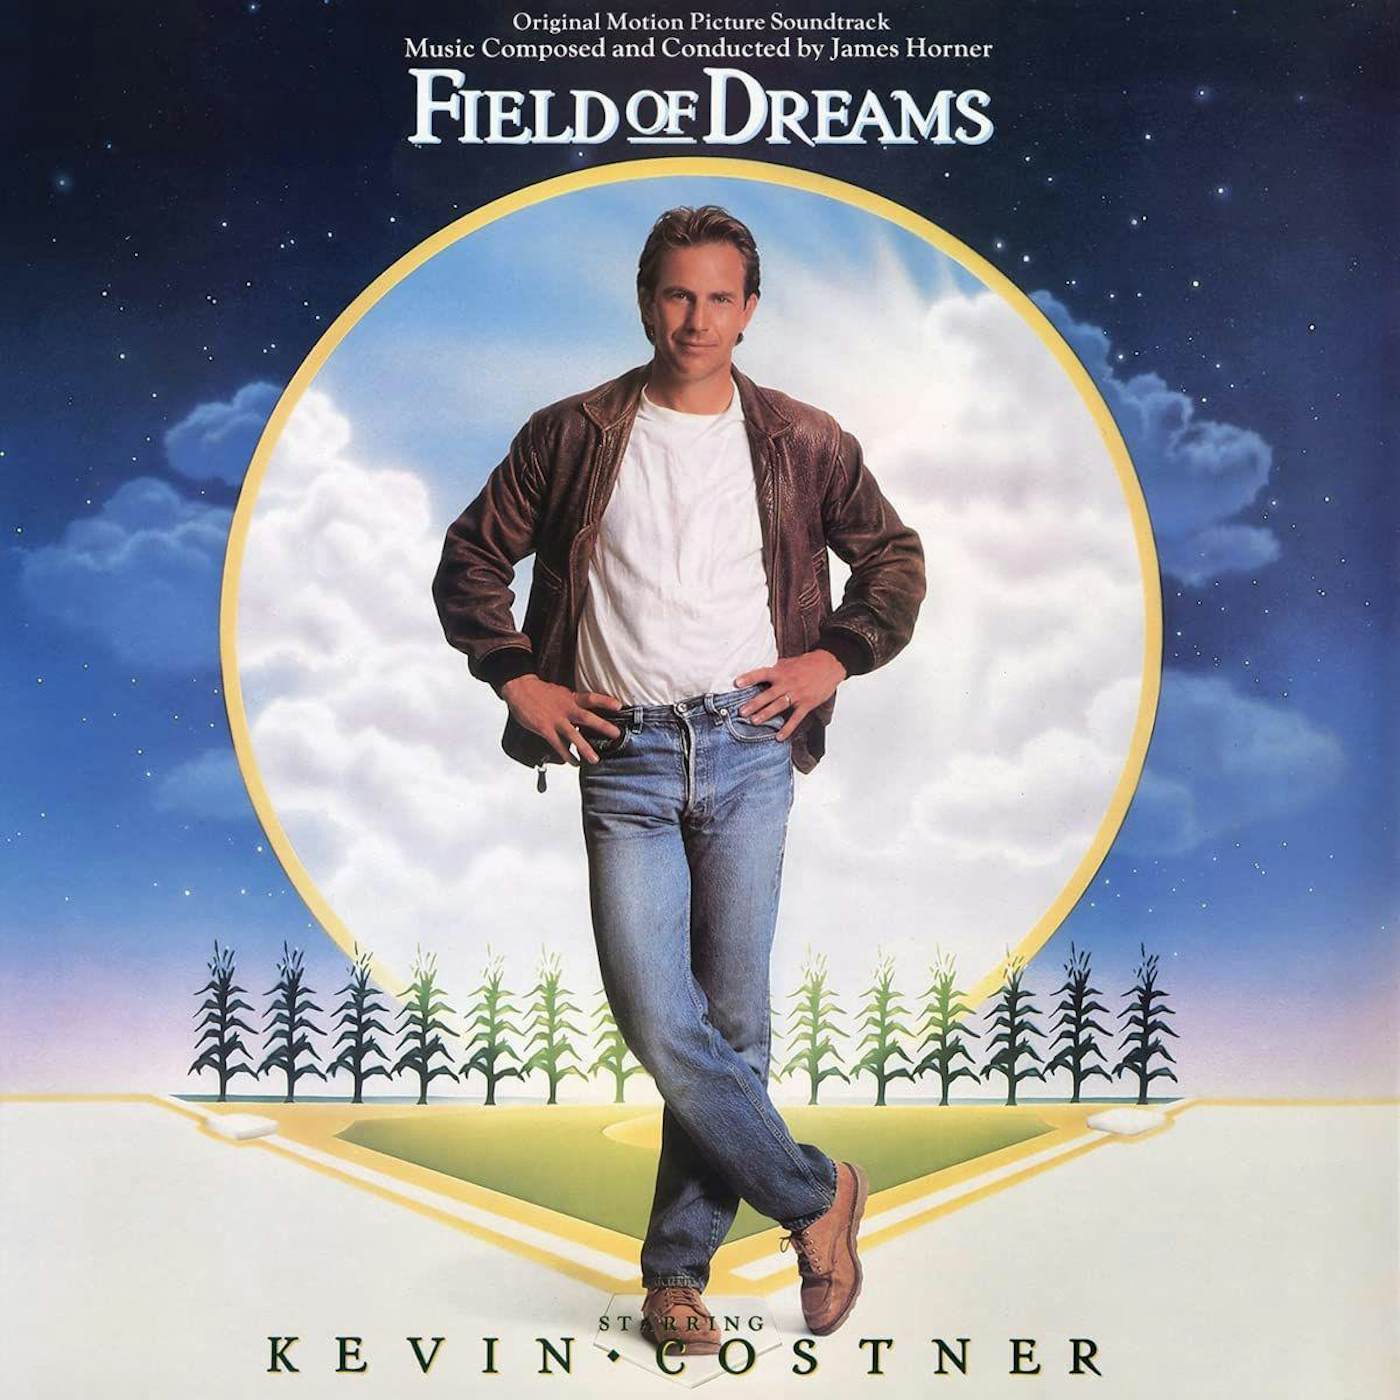 James Horner Field Of Dreams Original Soundtrack (Cornfield Green) Vinyl Record